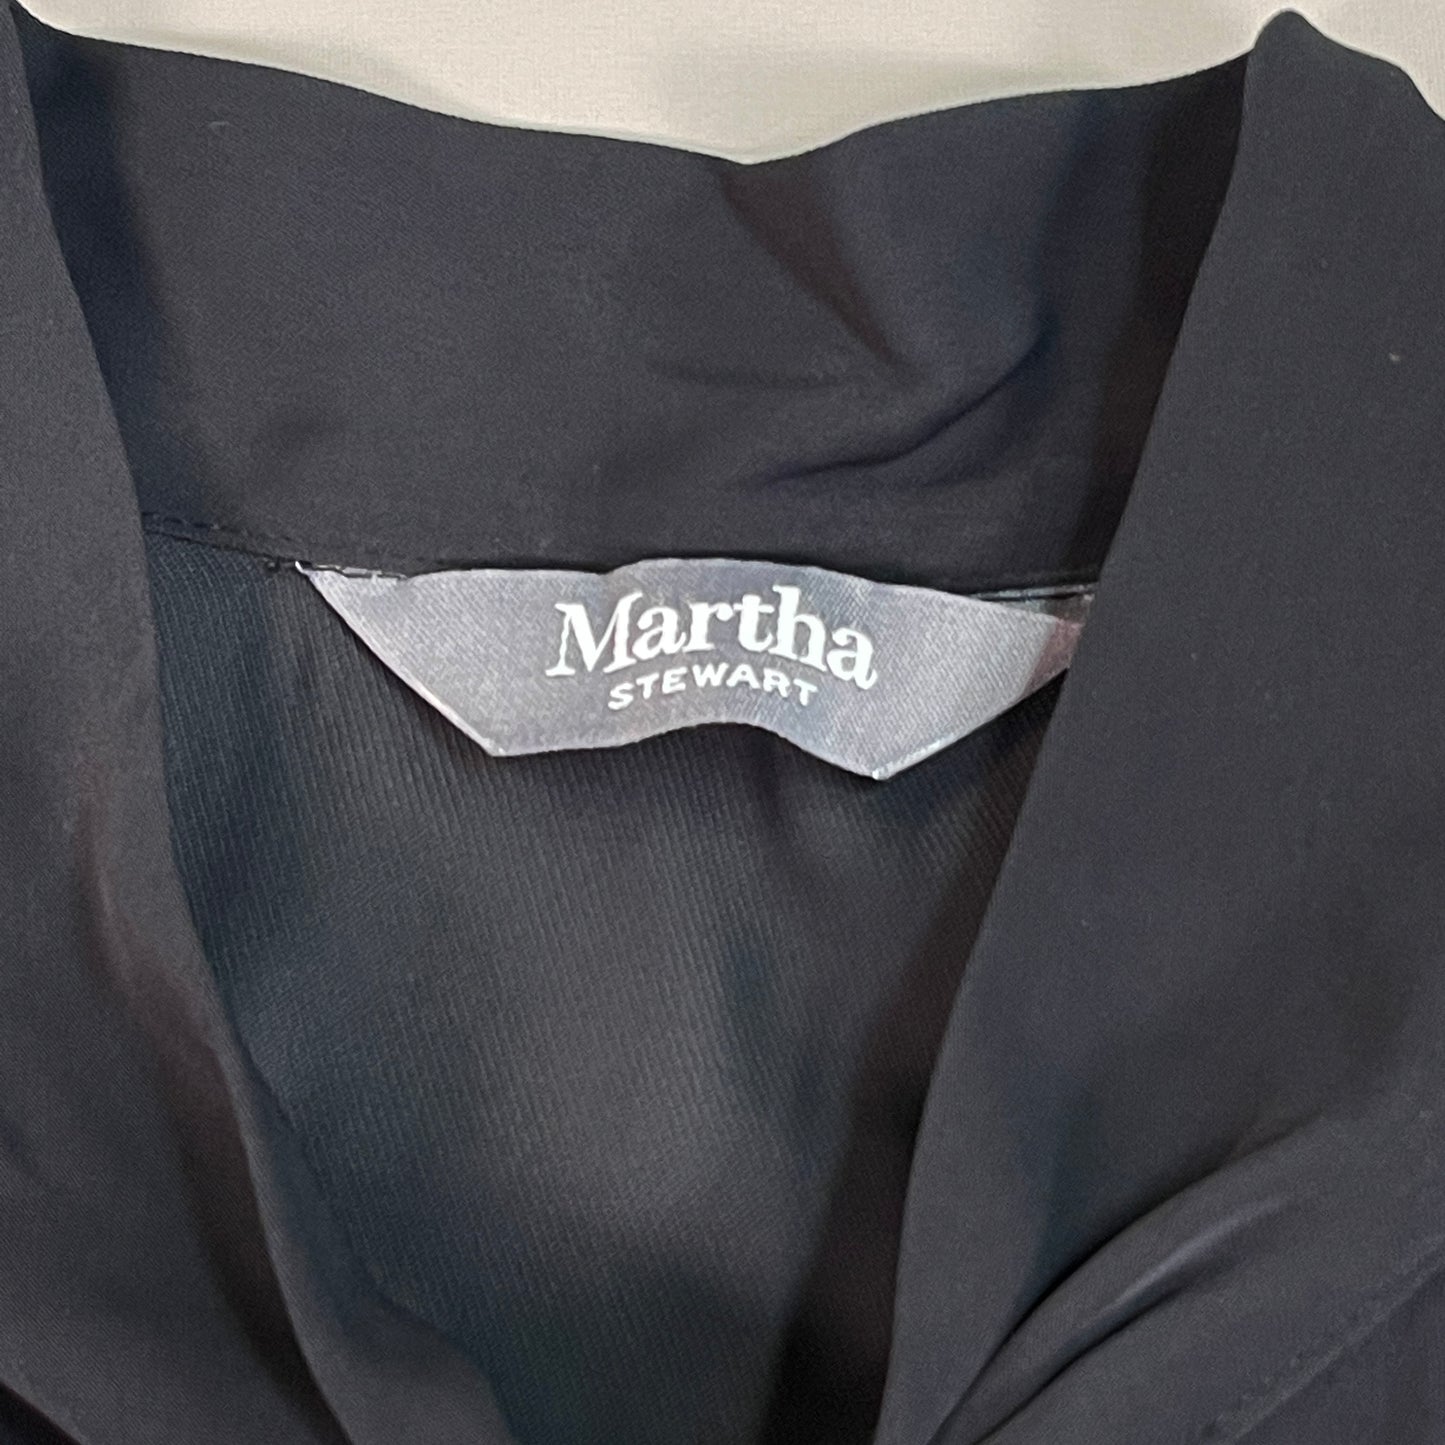 MARTHA STEWART Woven Front Button Blouse Top Tie Neck Women's Sz L Francesca Black (New)